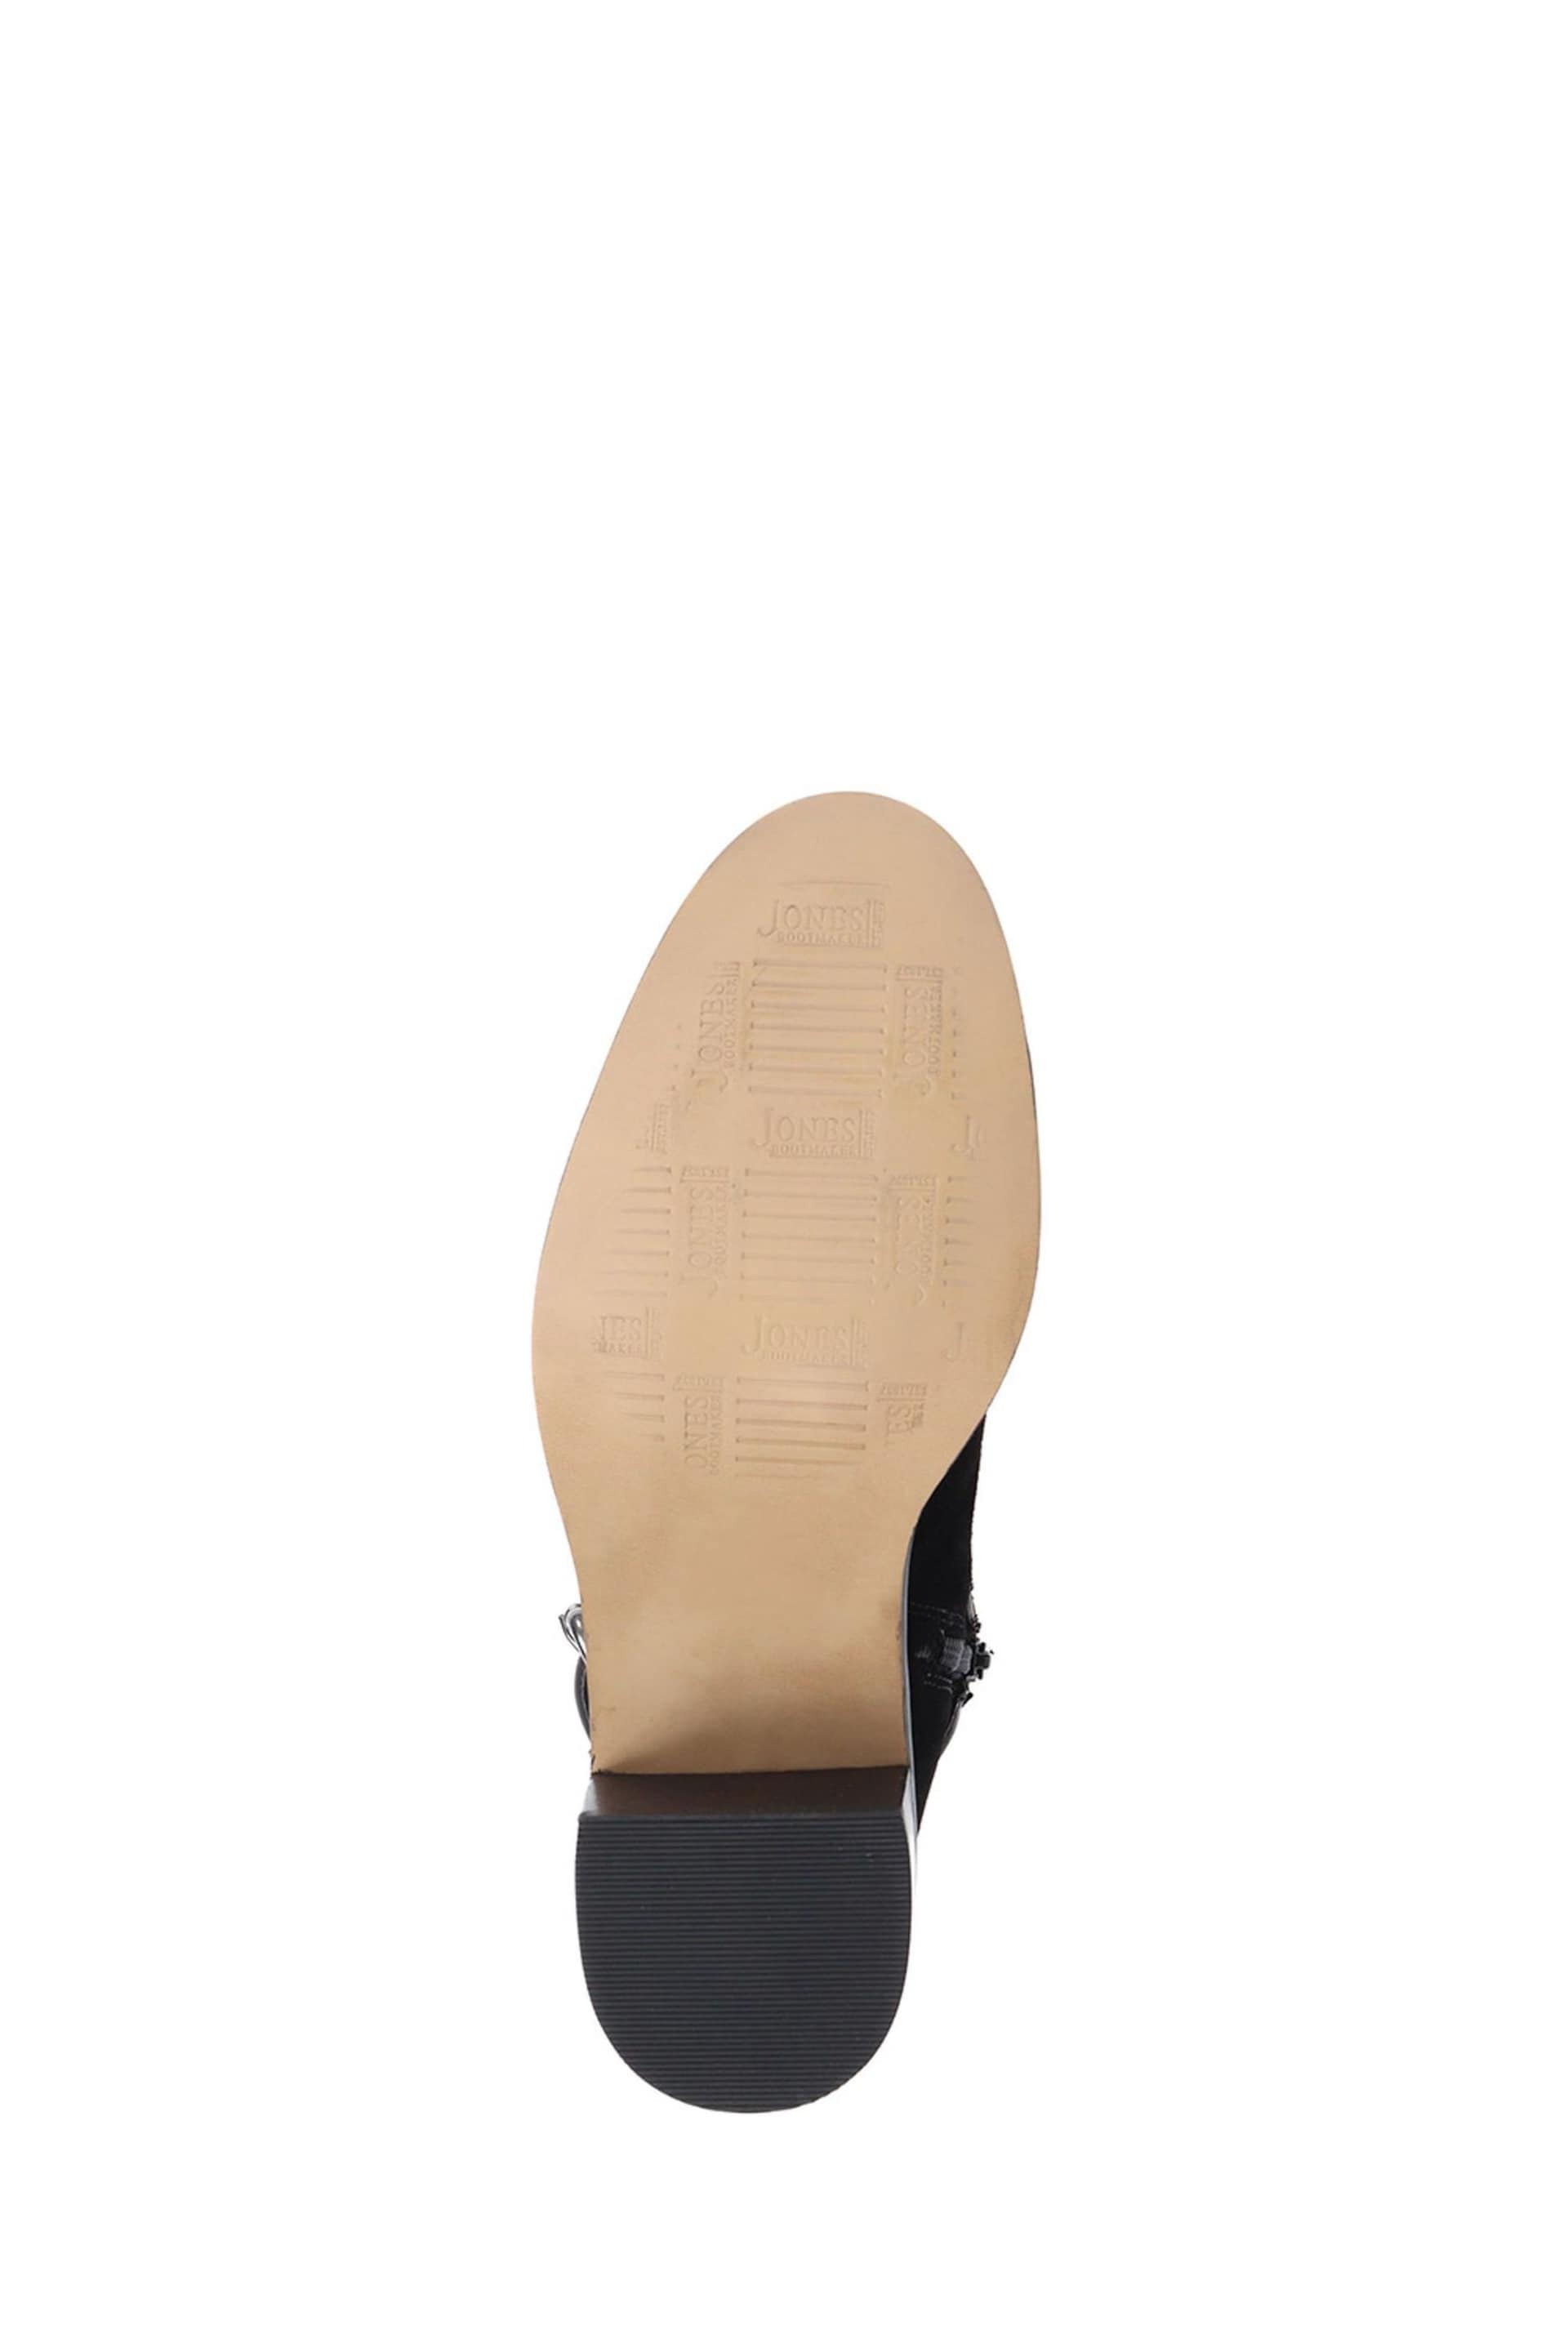 Jones Bootmaker Losabet Leather Buckle Strap Black Ankle Boots - Image 6 of 6